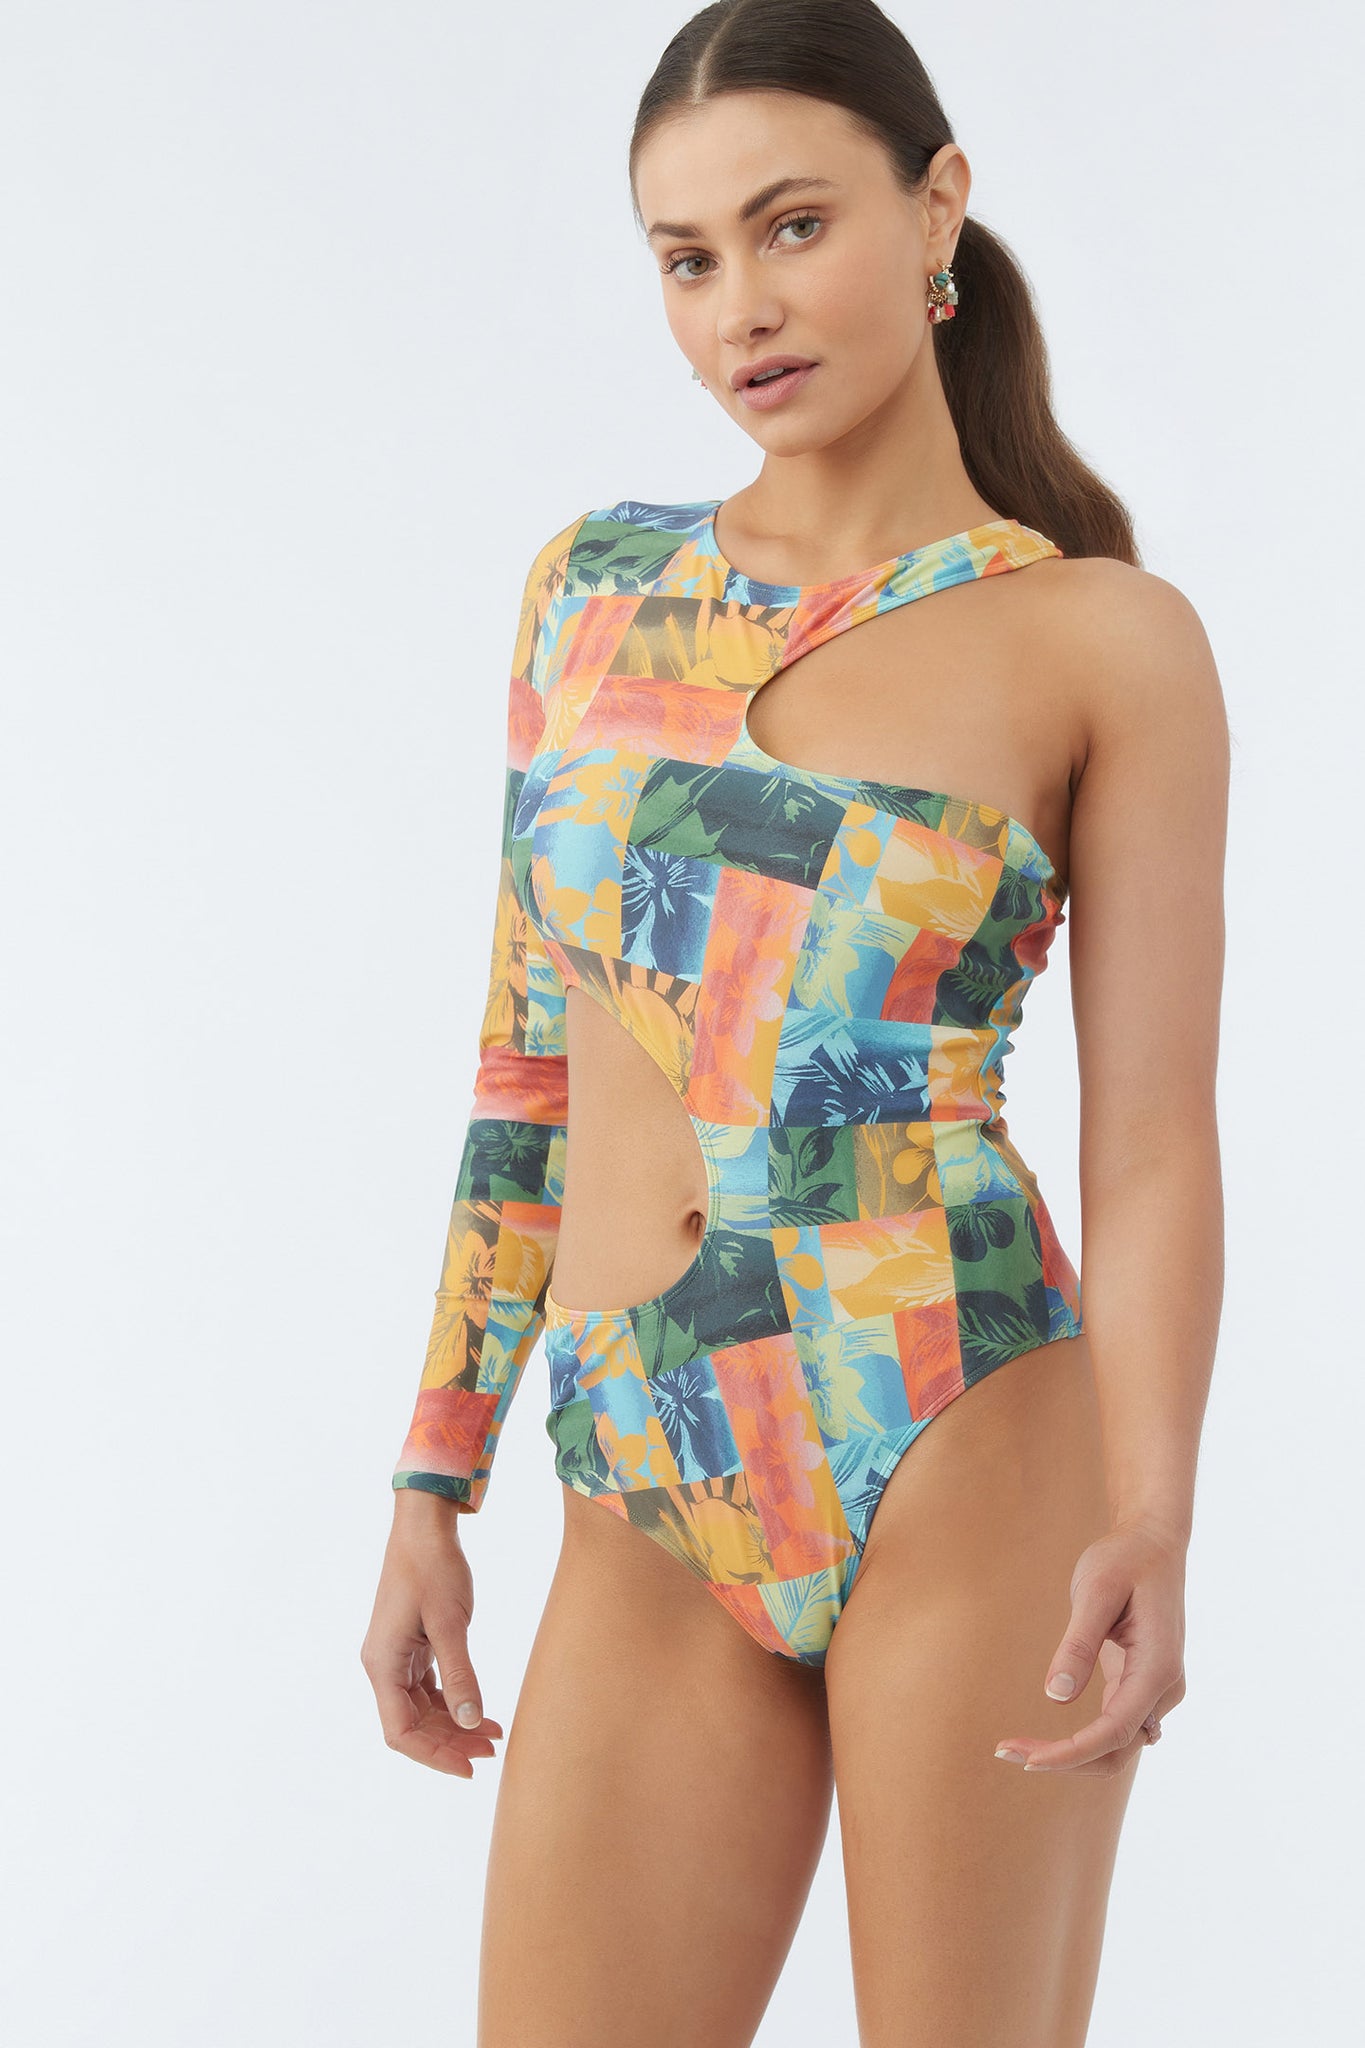 BIKINX Surfing Suit for Women Sleeveless One Piece Swimsuit Zippy